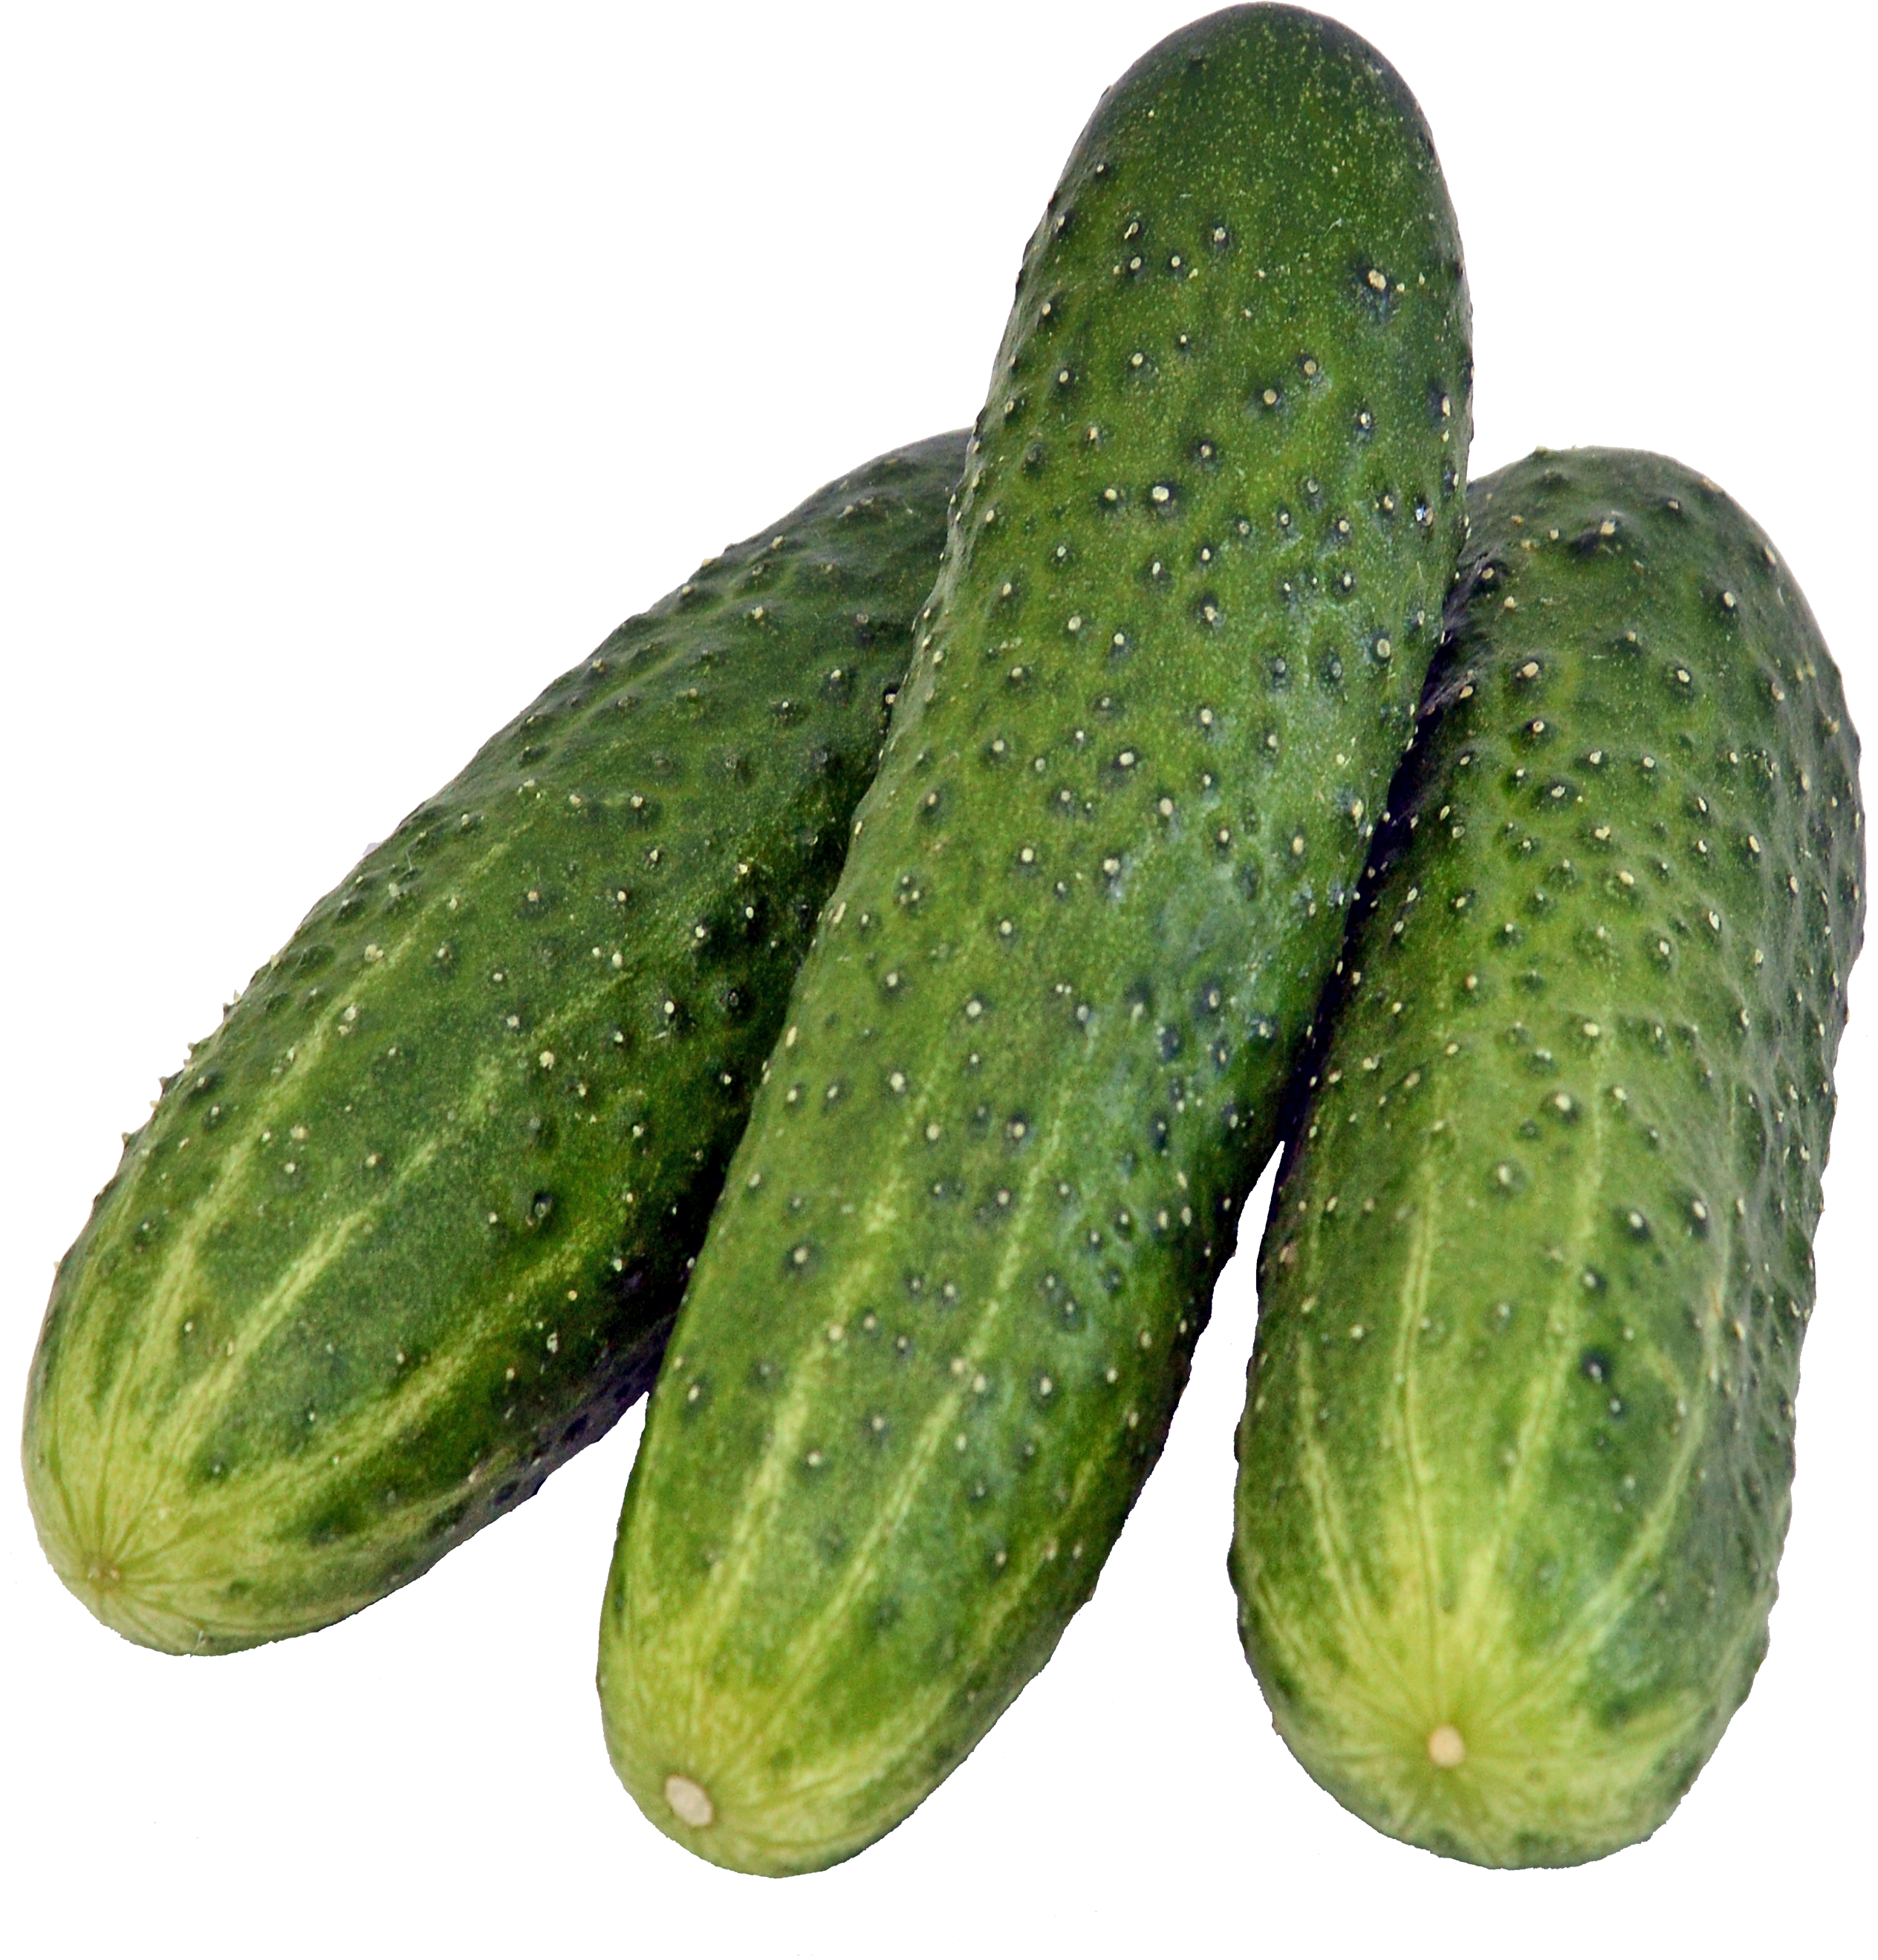 three green cucumbers PNG